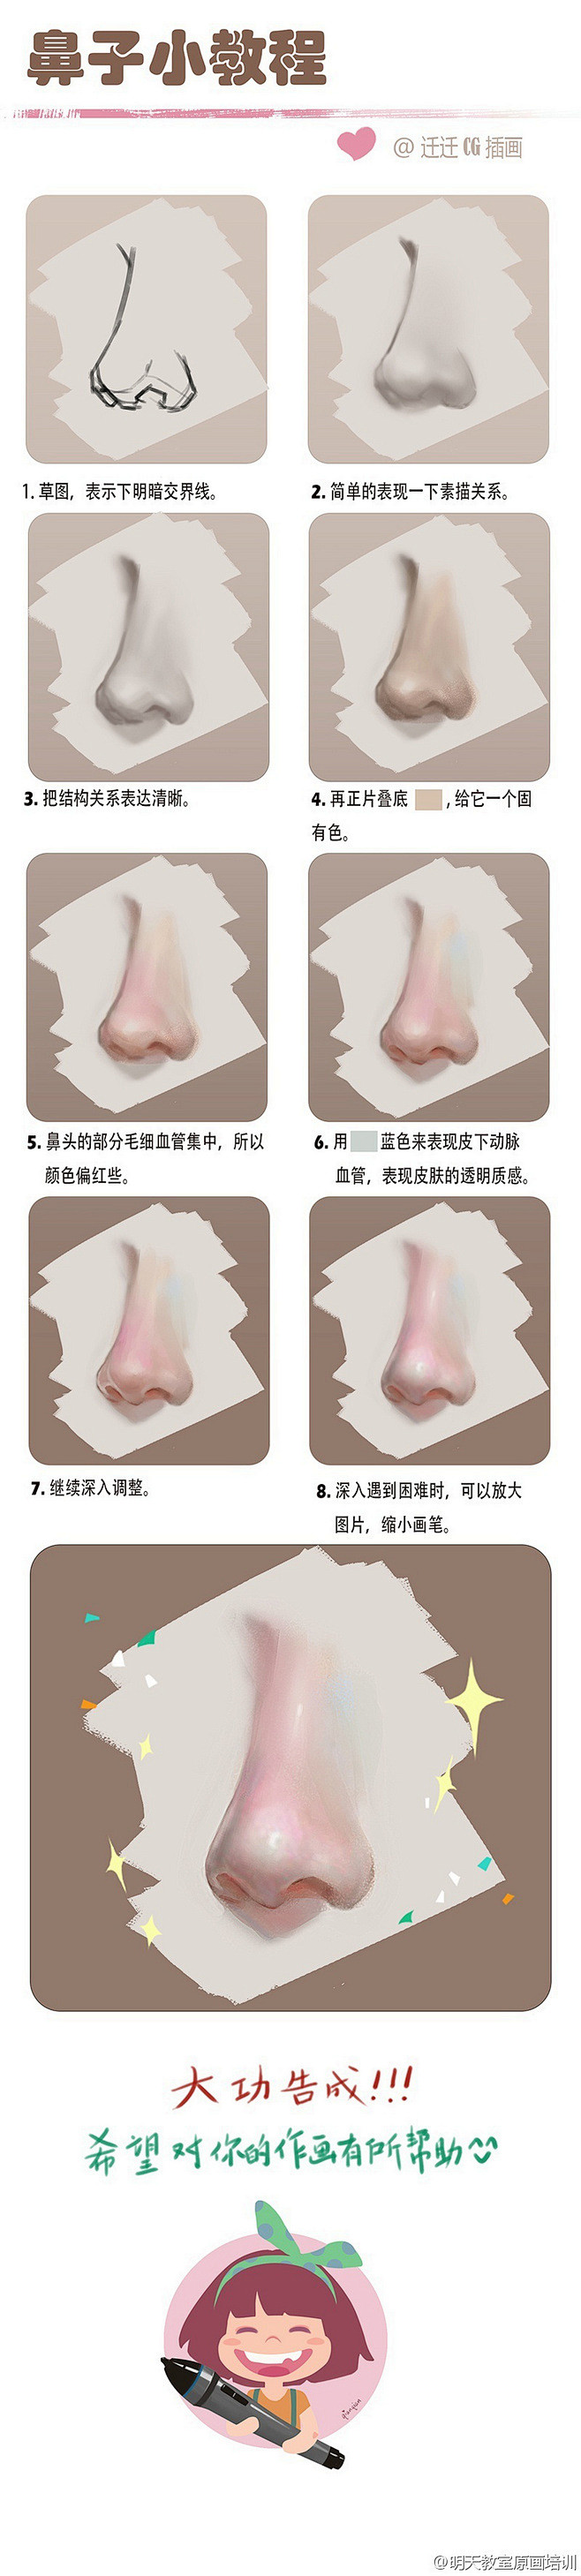 鼻子教程